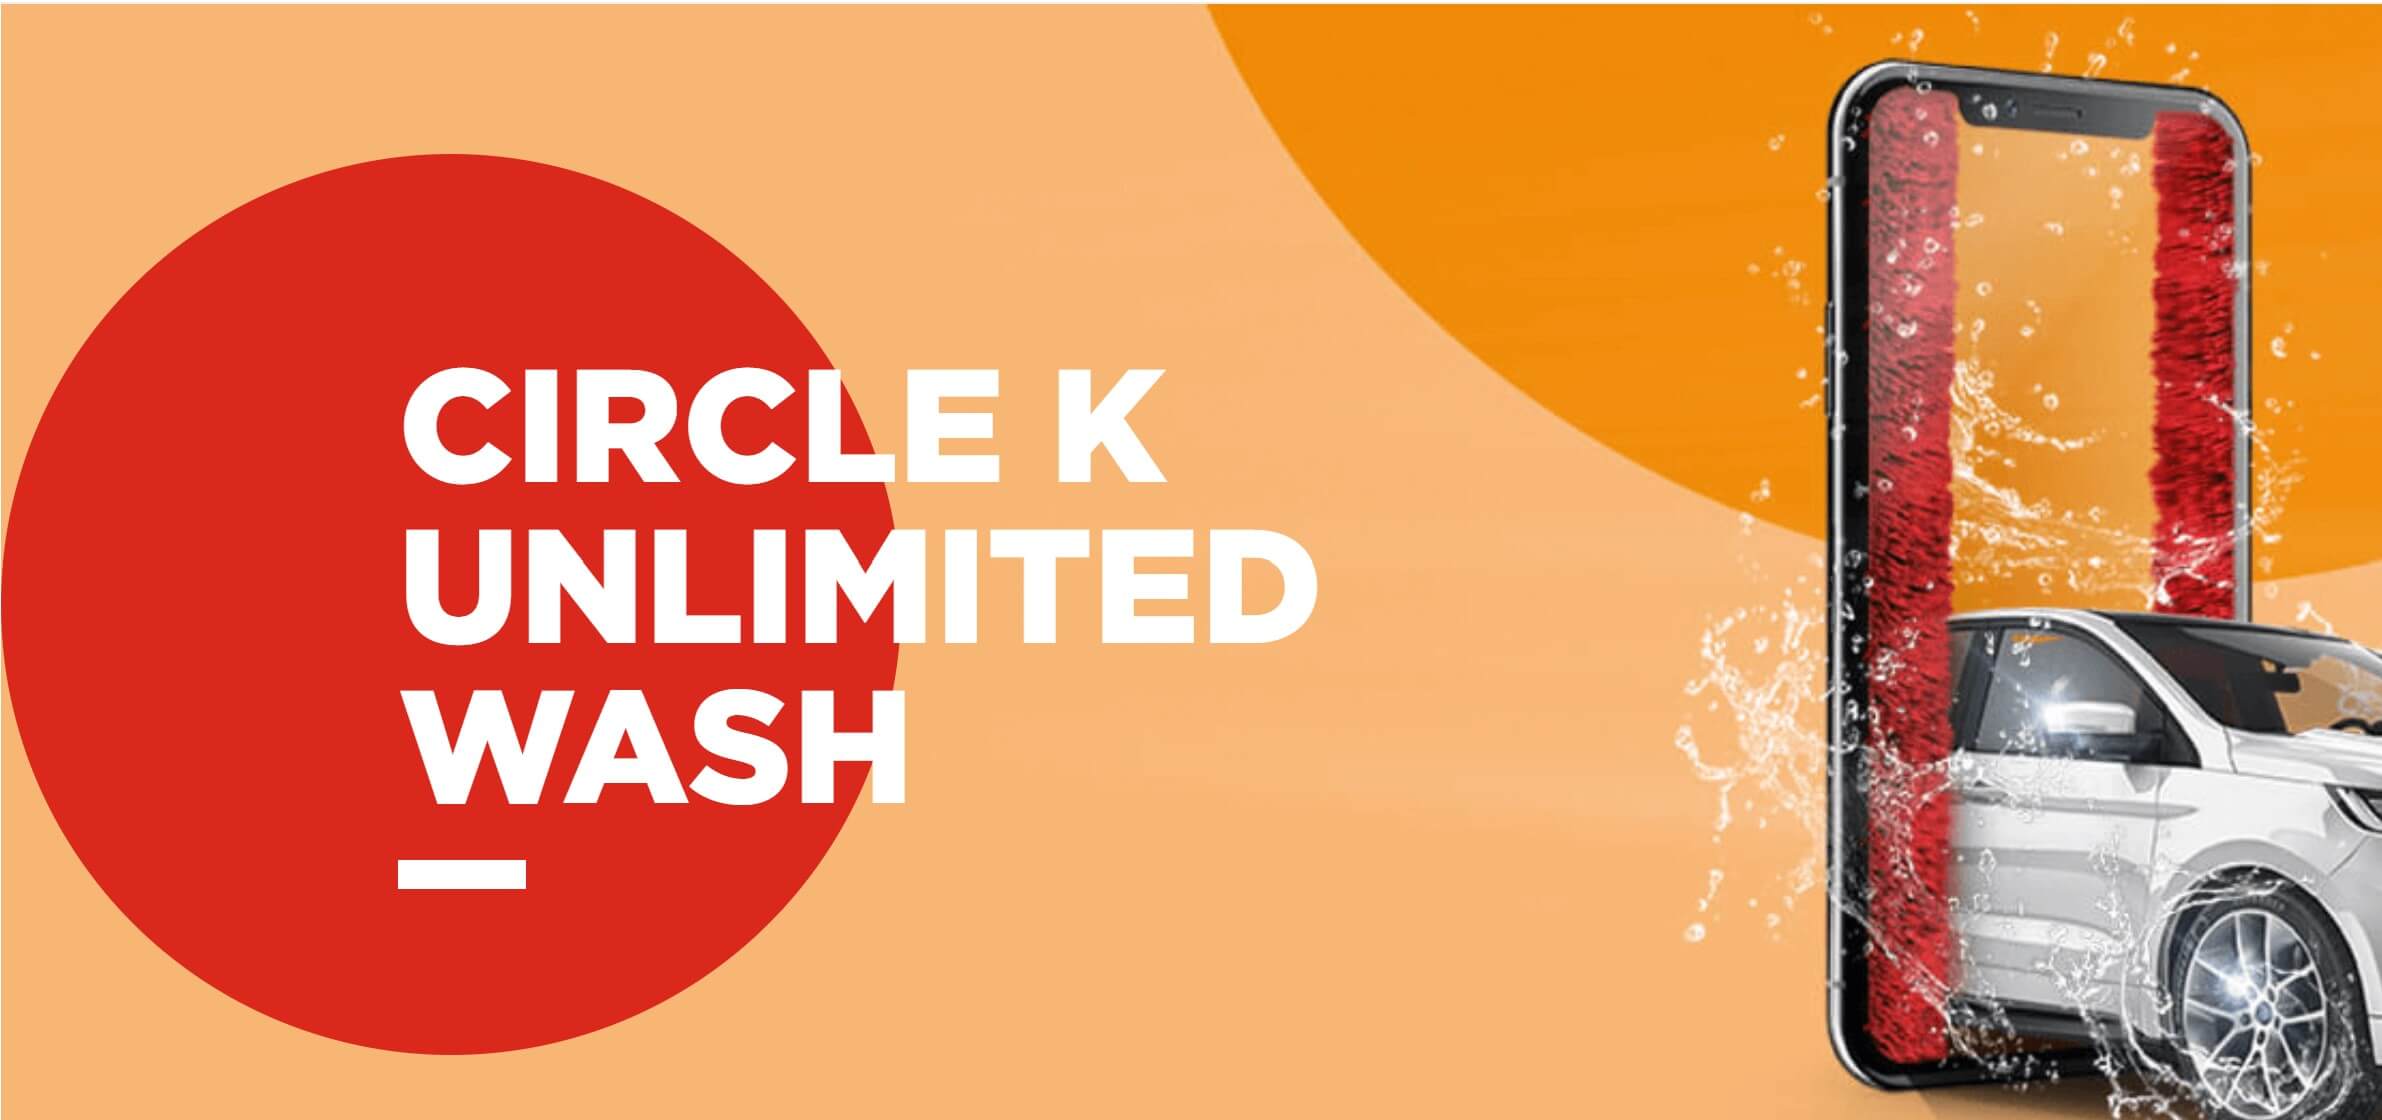 CK unlimited Wash Ad